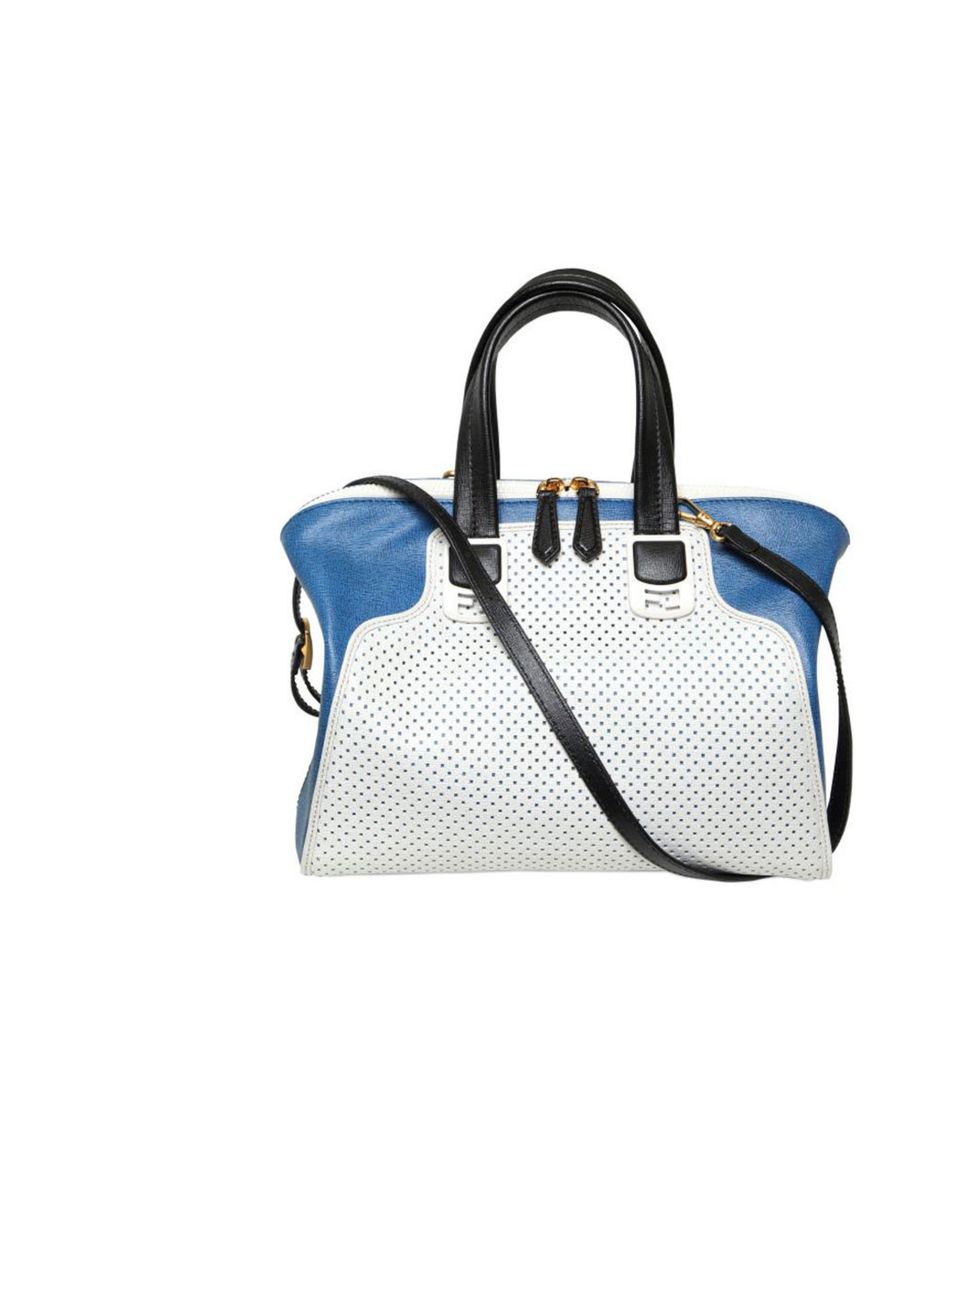 <p>Fendi perforated leather tote bag, £1,079.99, at <a href="http://www.luisaviaroma.com/index.aspx?">luisaviaroma.com</a></p>